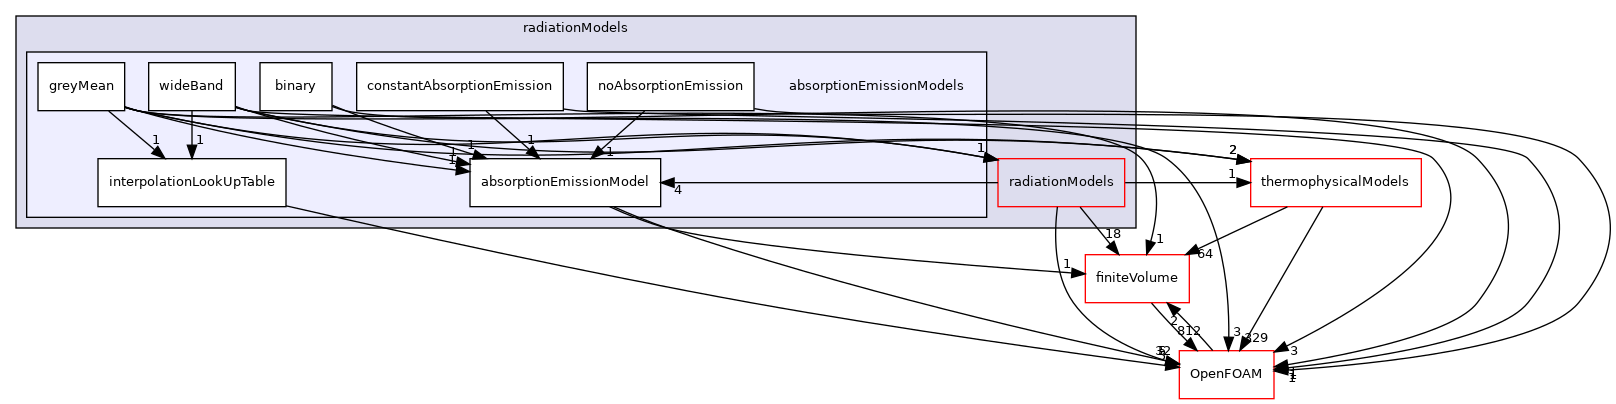 src/radiationModels/absorptionEmissionModels